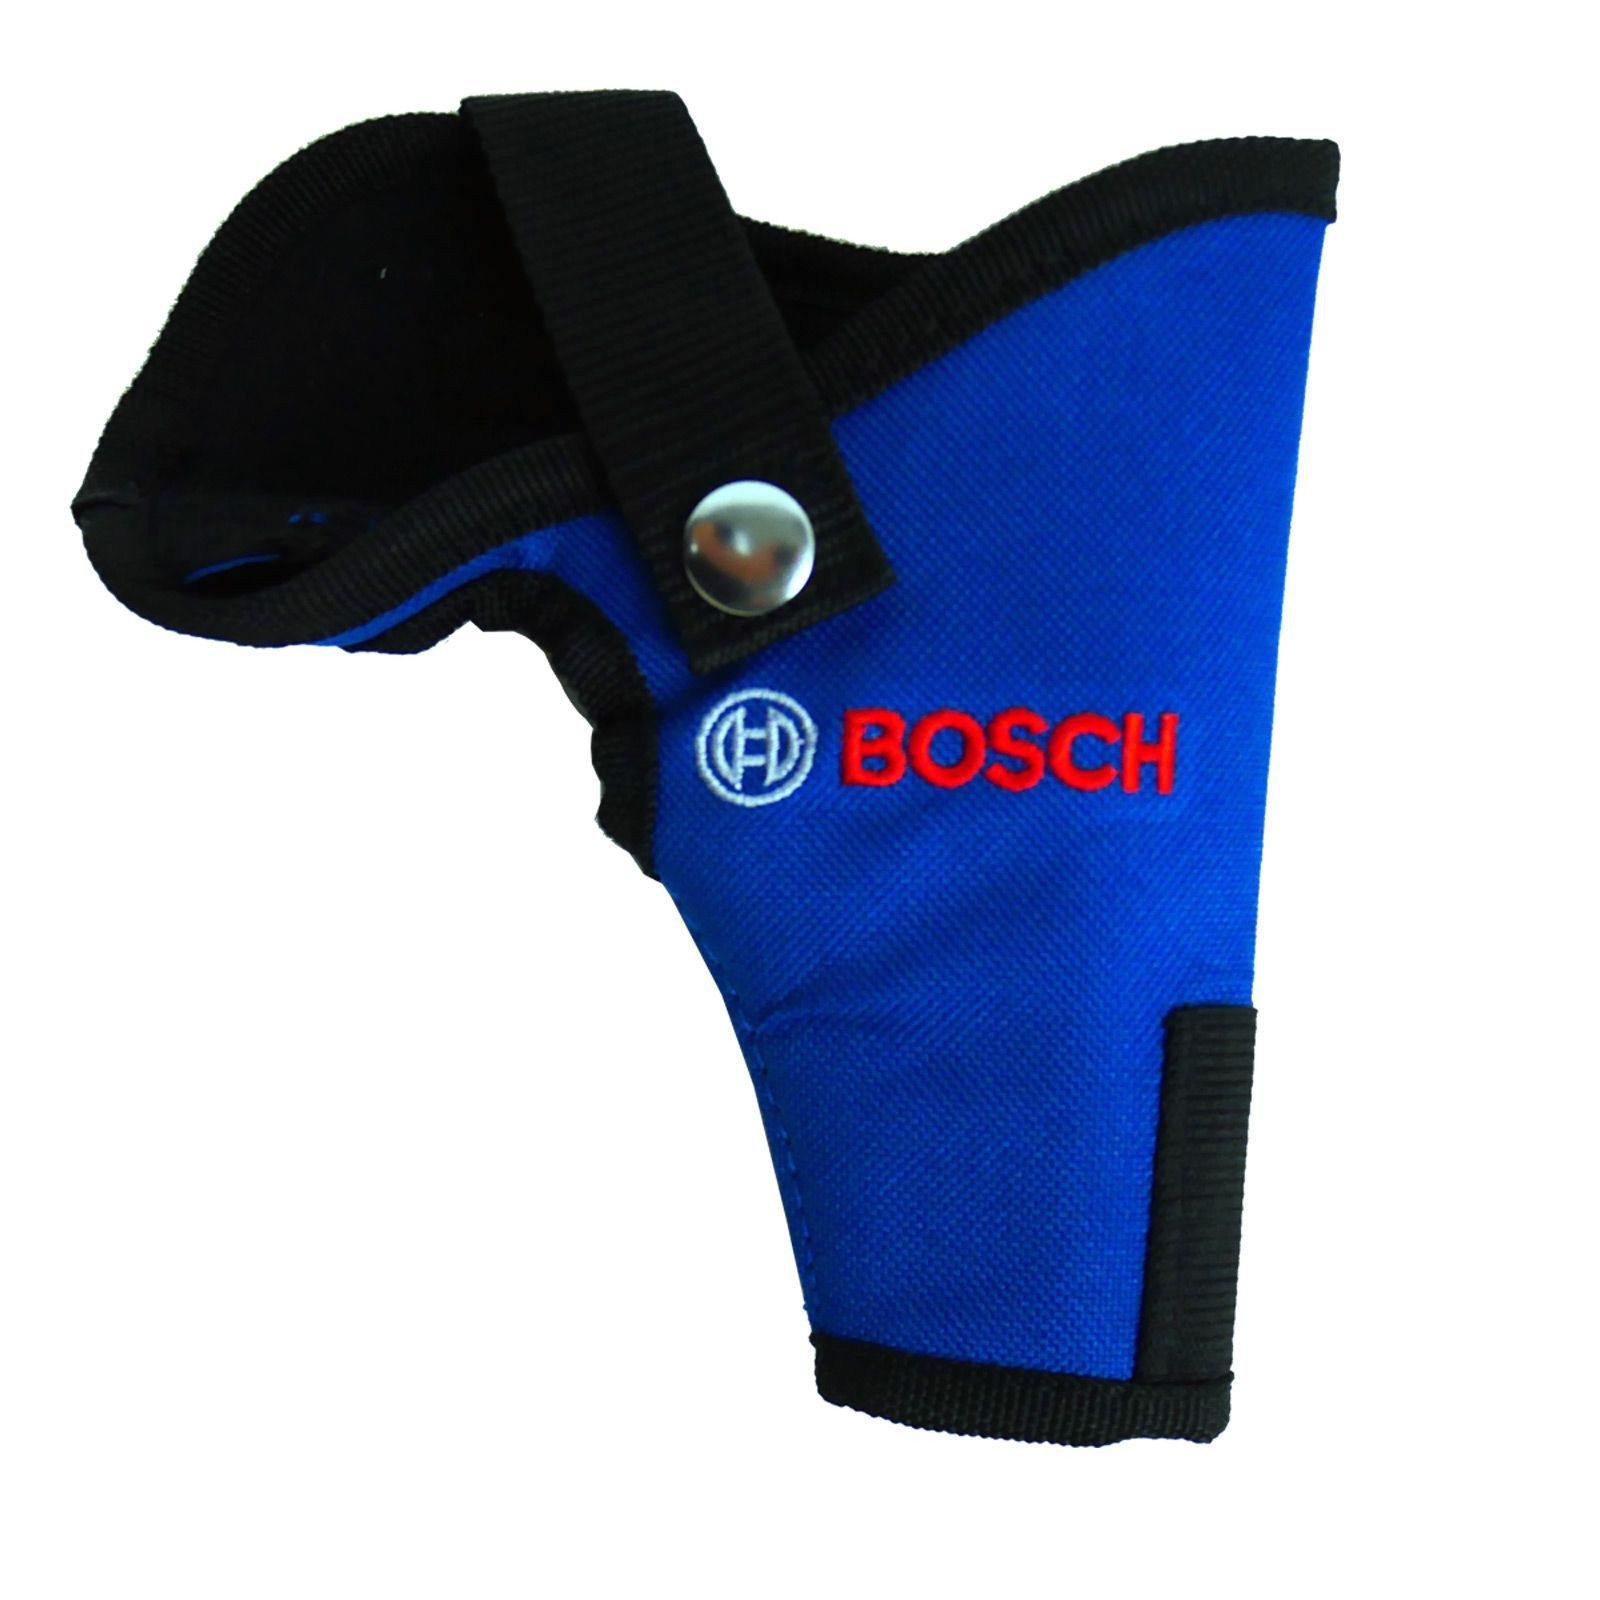 Bosch Gürtelholster blau für Akkuschrauber GSB GSR GDR etc. 